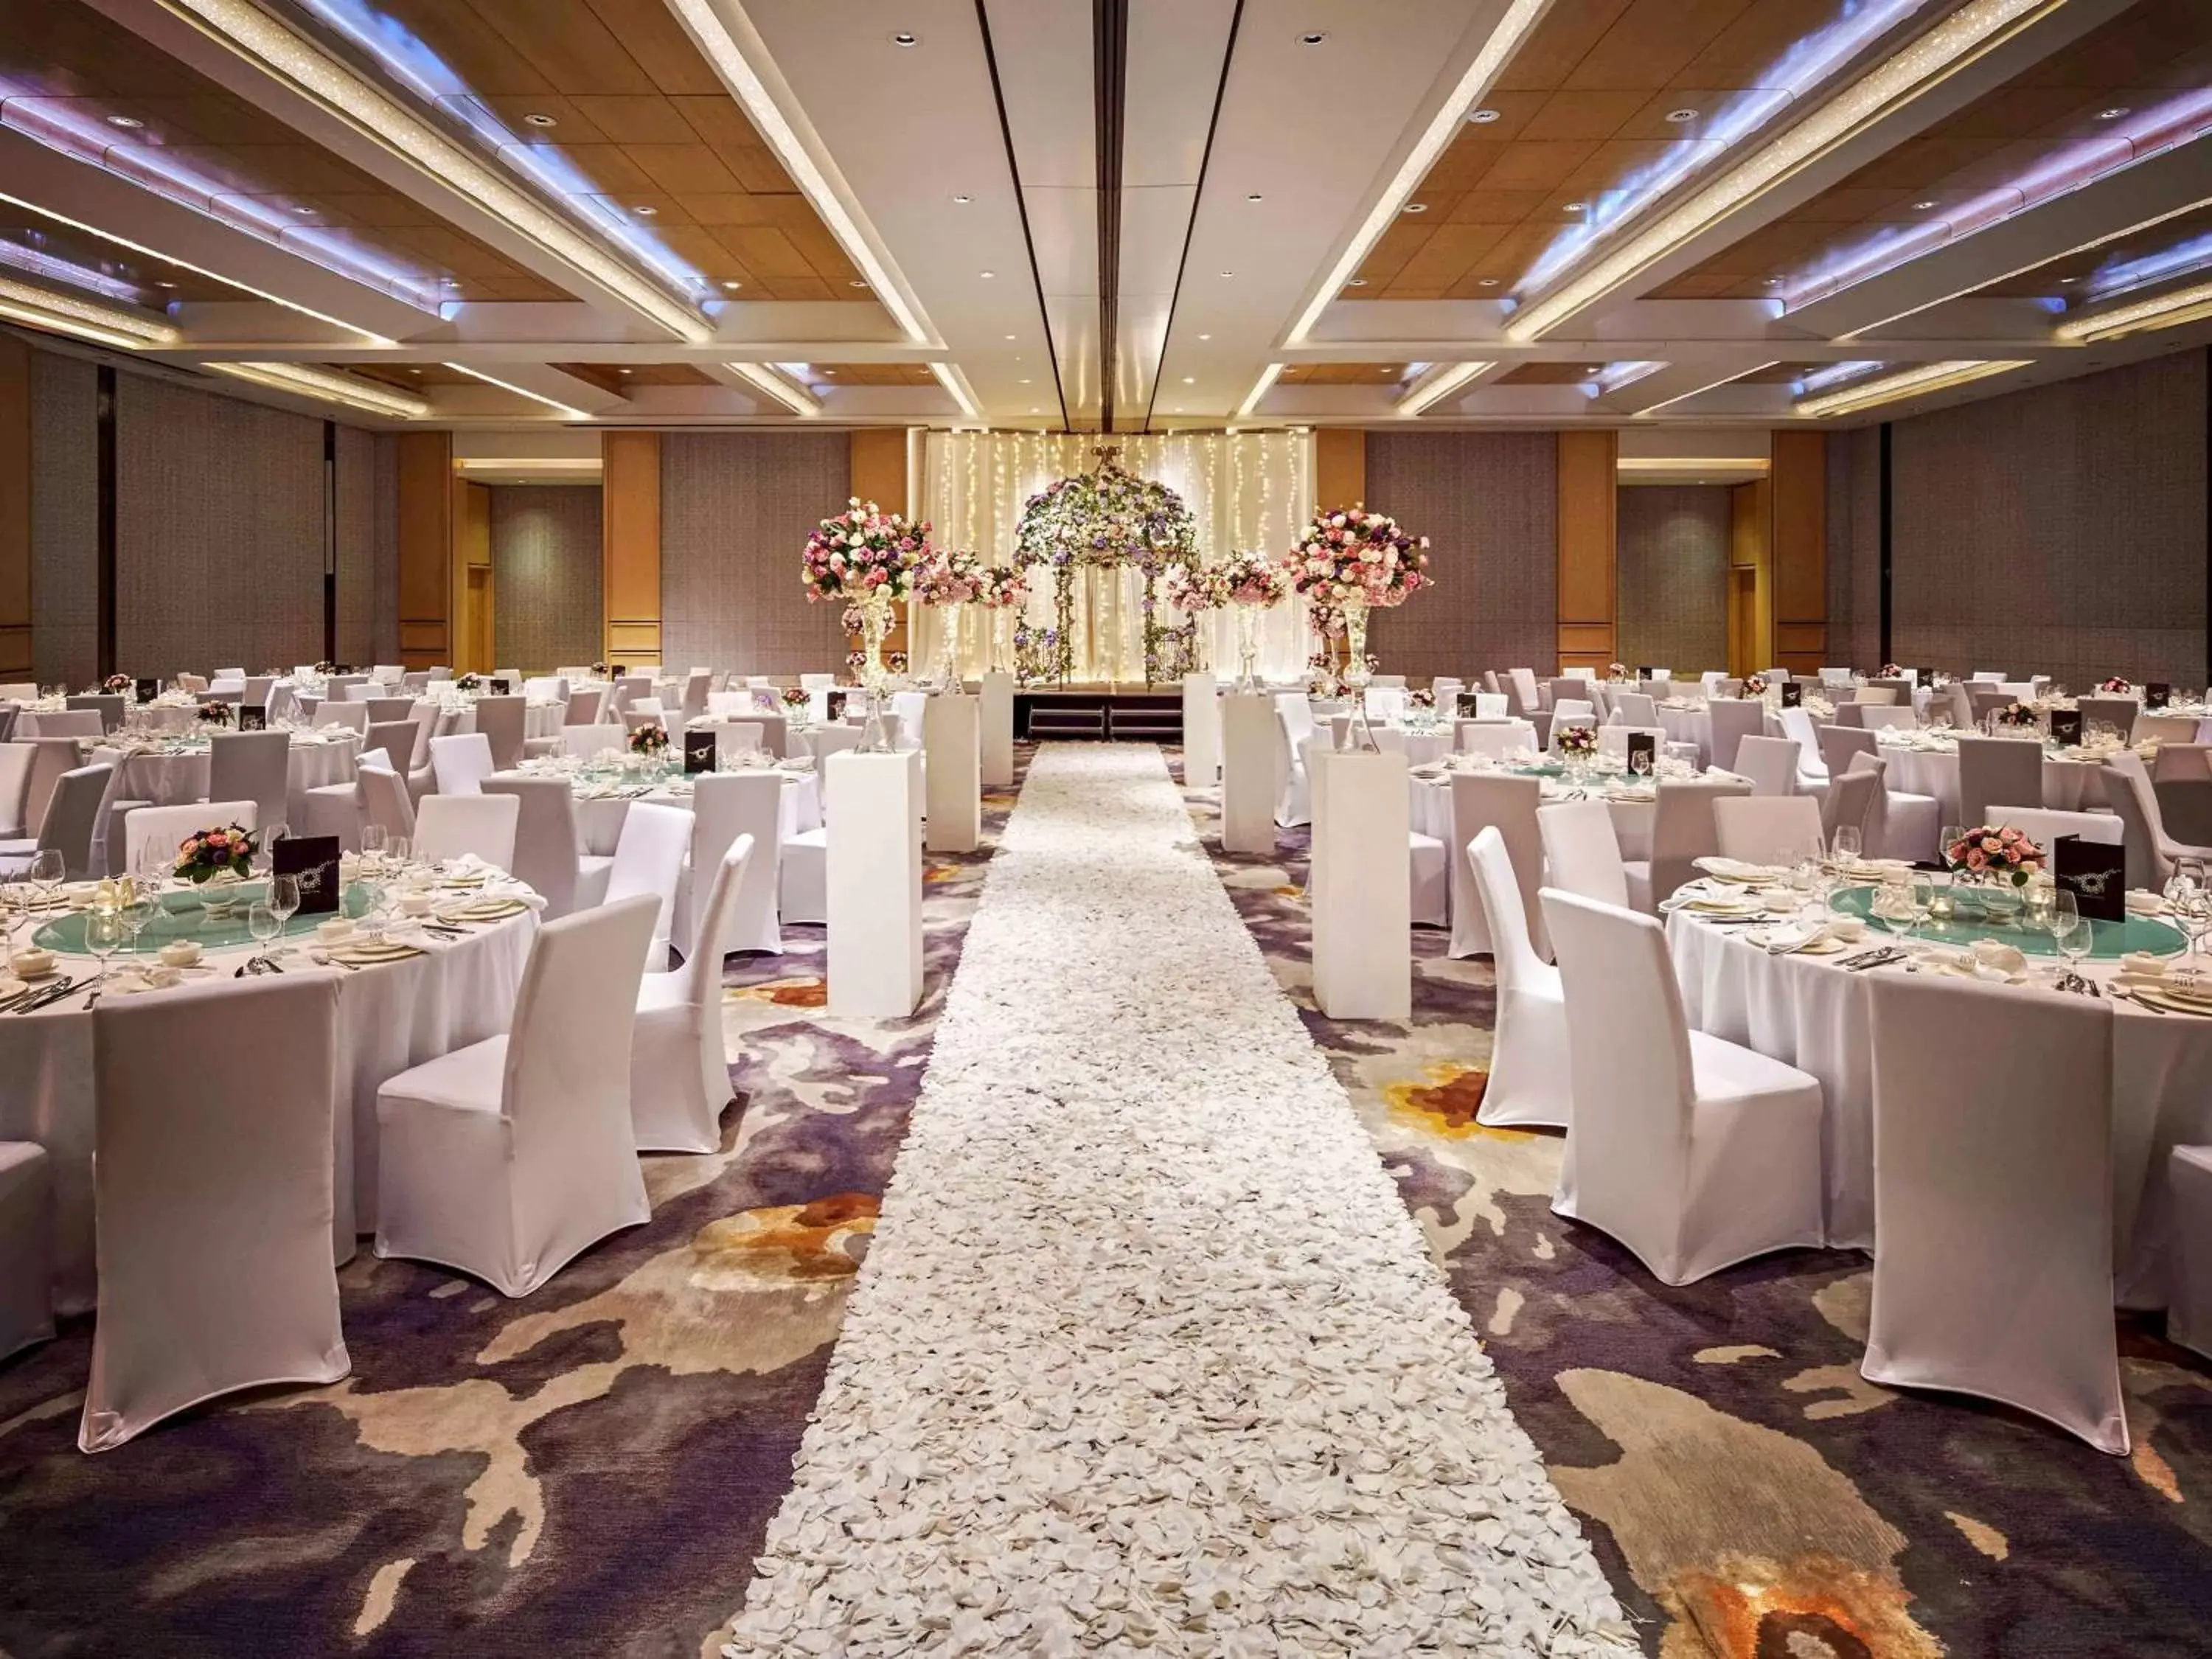 Banquet/Function facilities, Banquet Facilities in Sofitel Singapore City Centre